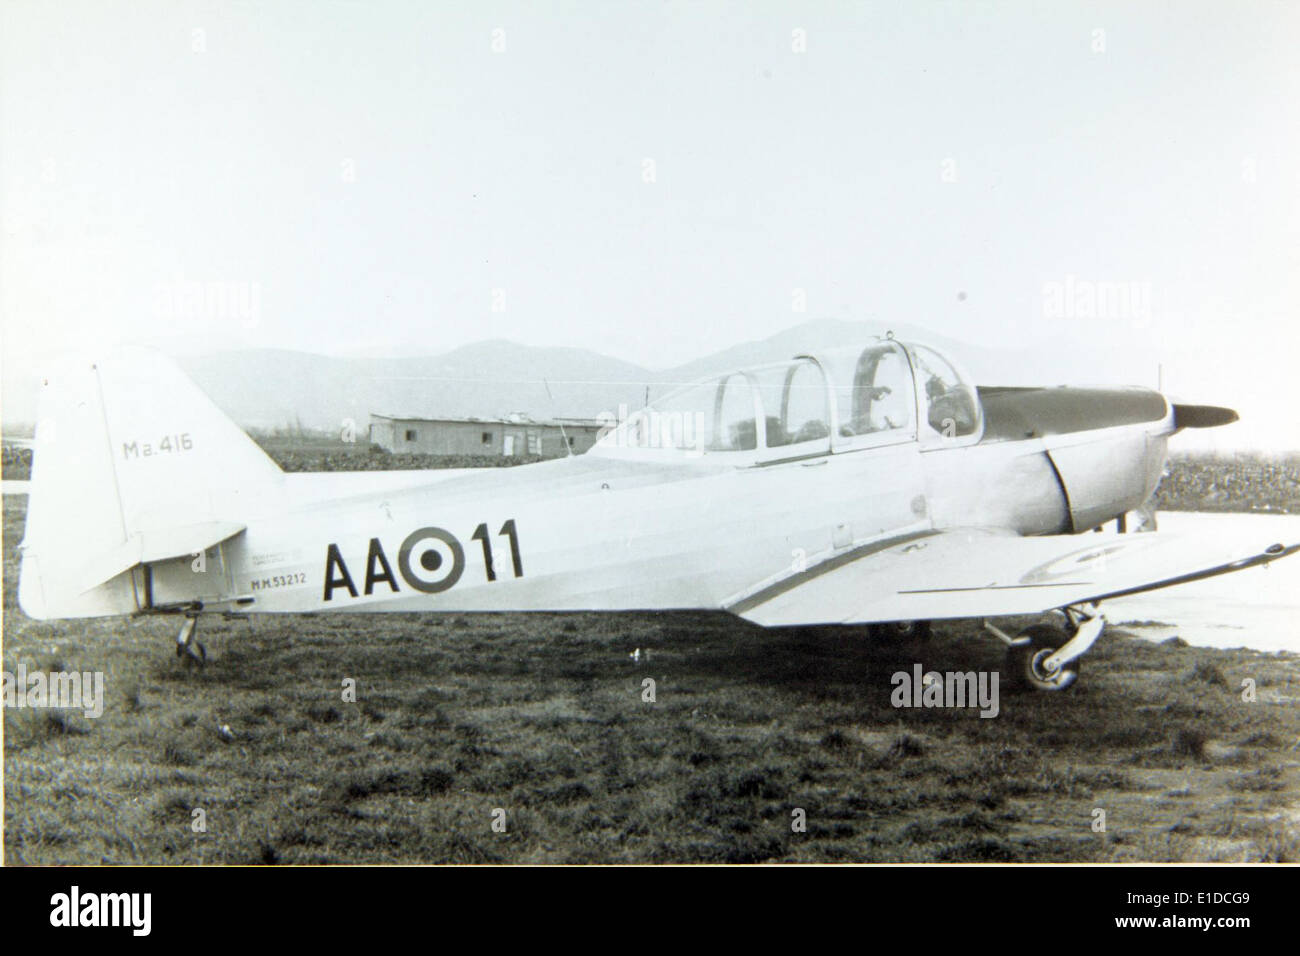 Macchi, M.416, Fokker S.11 Stock Photo - Alamy